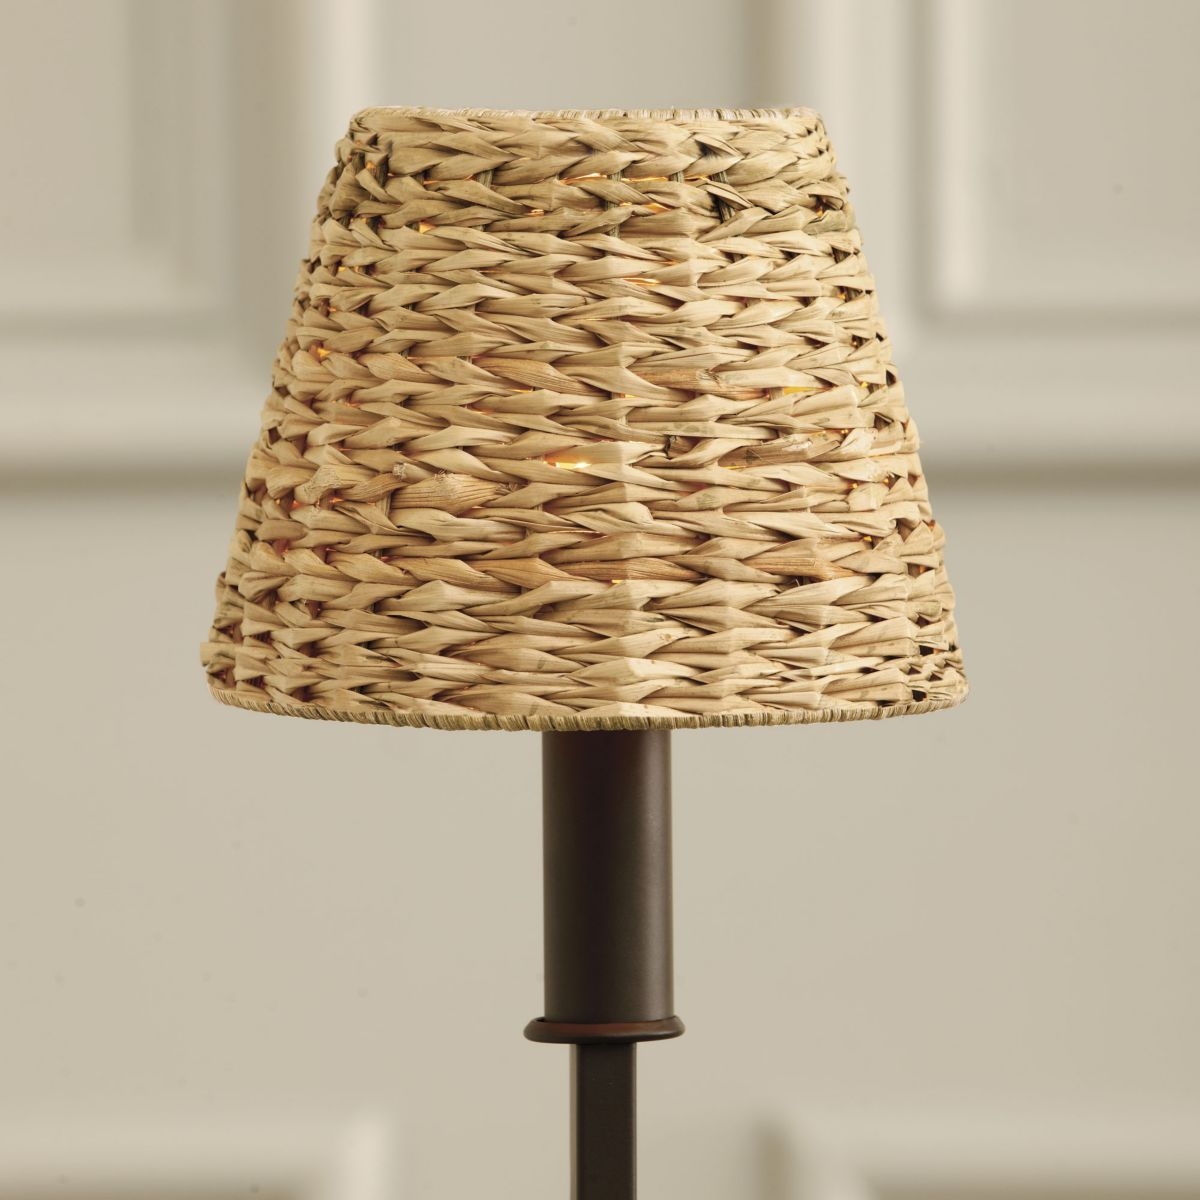 Seagrass lamp shade 25